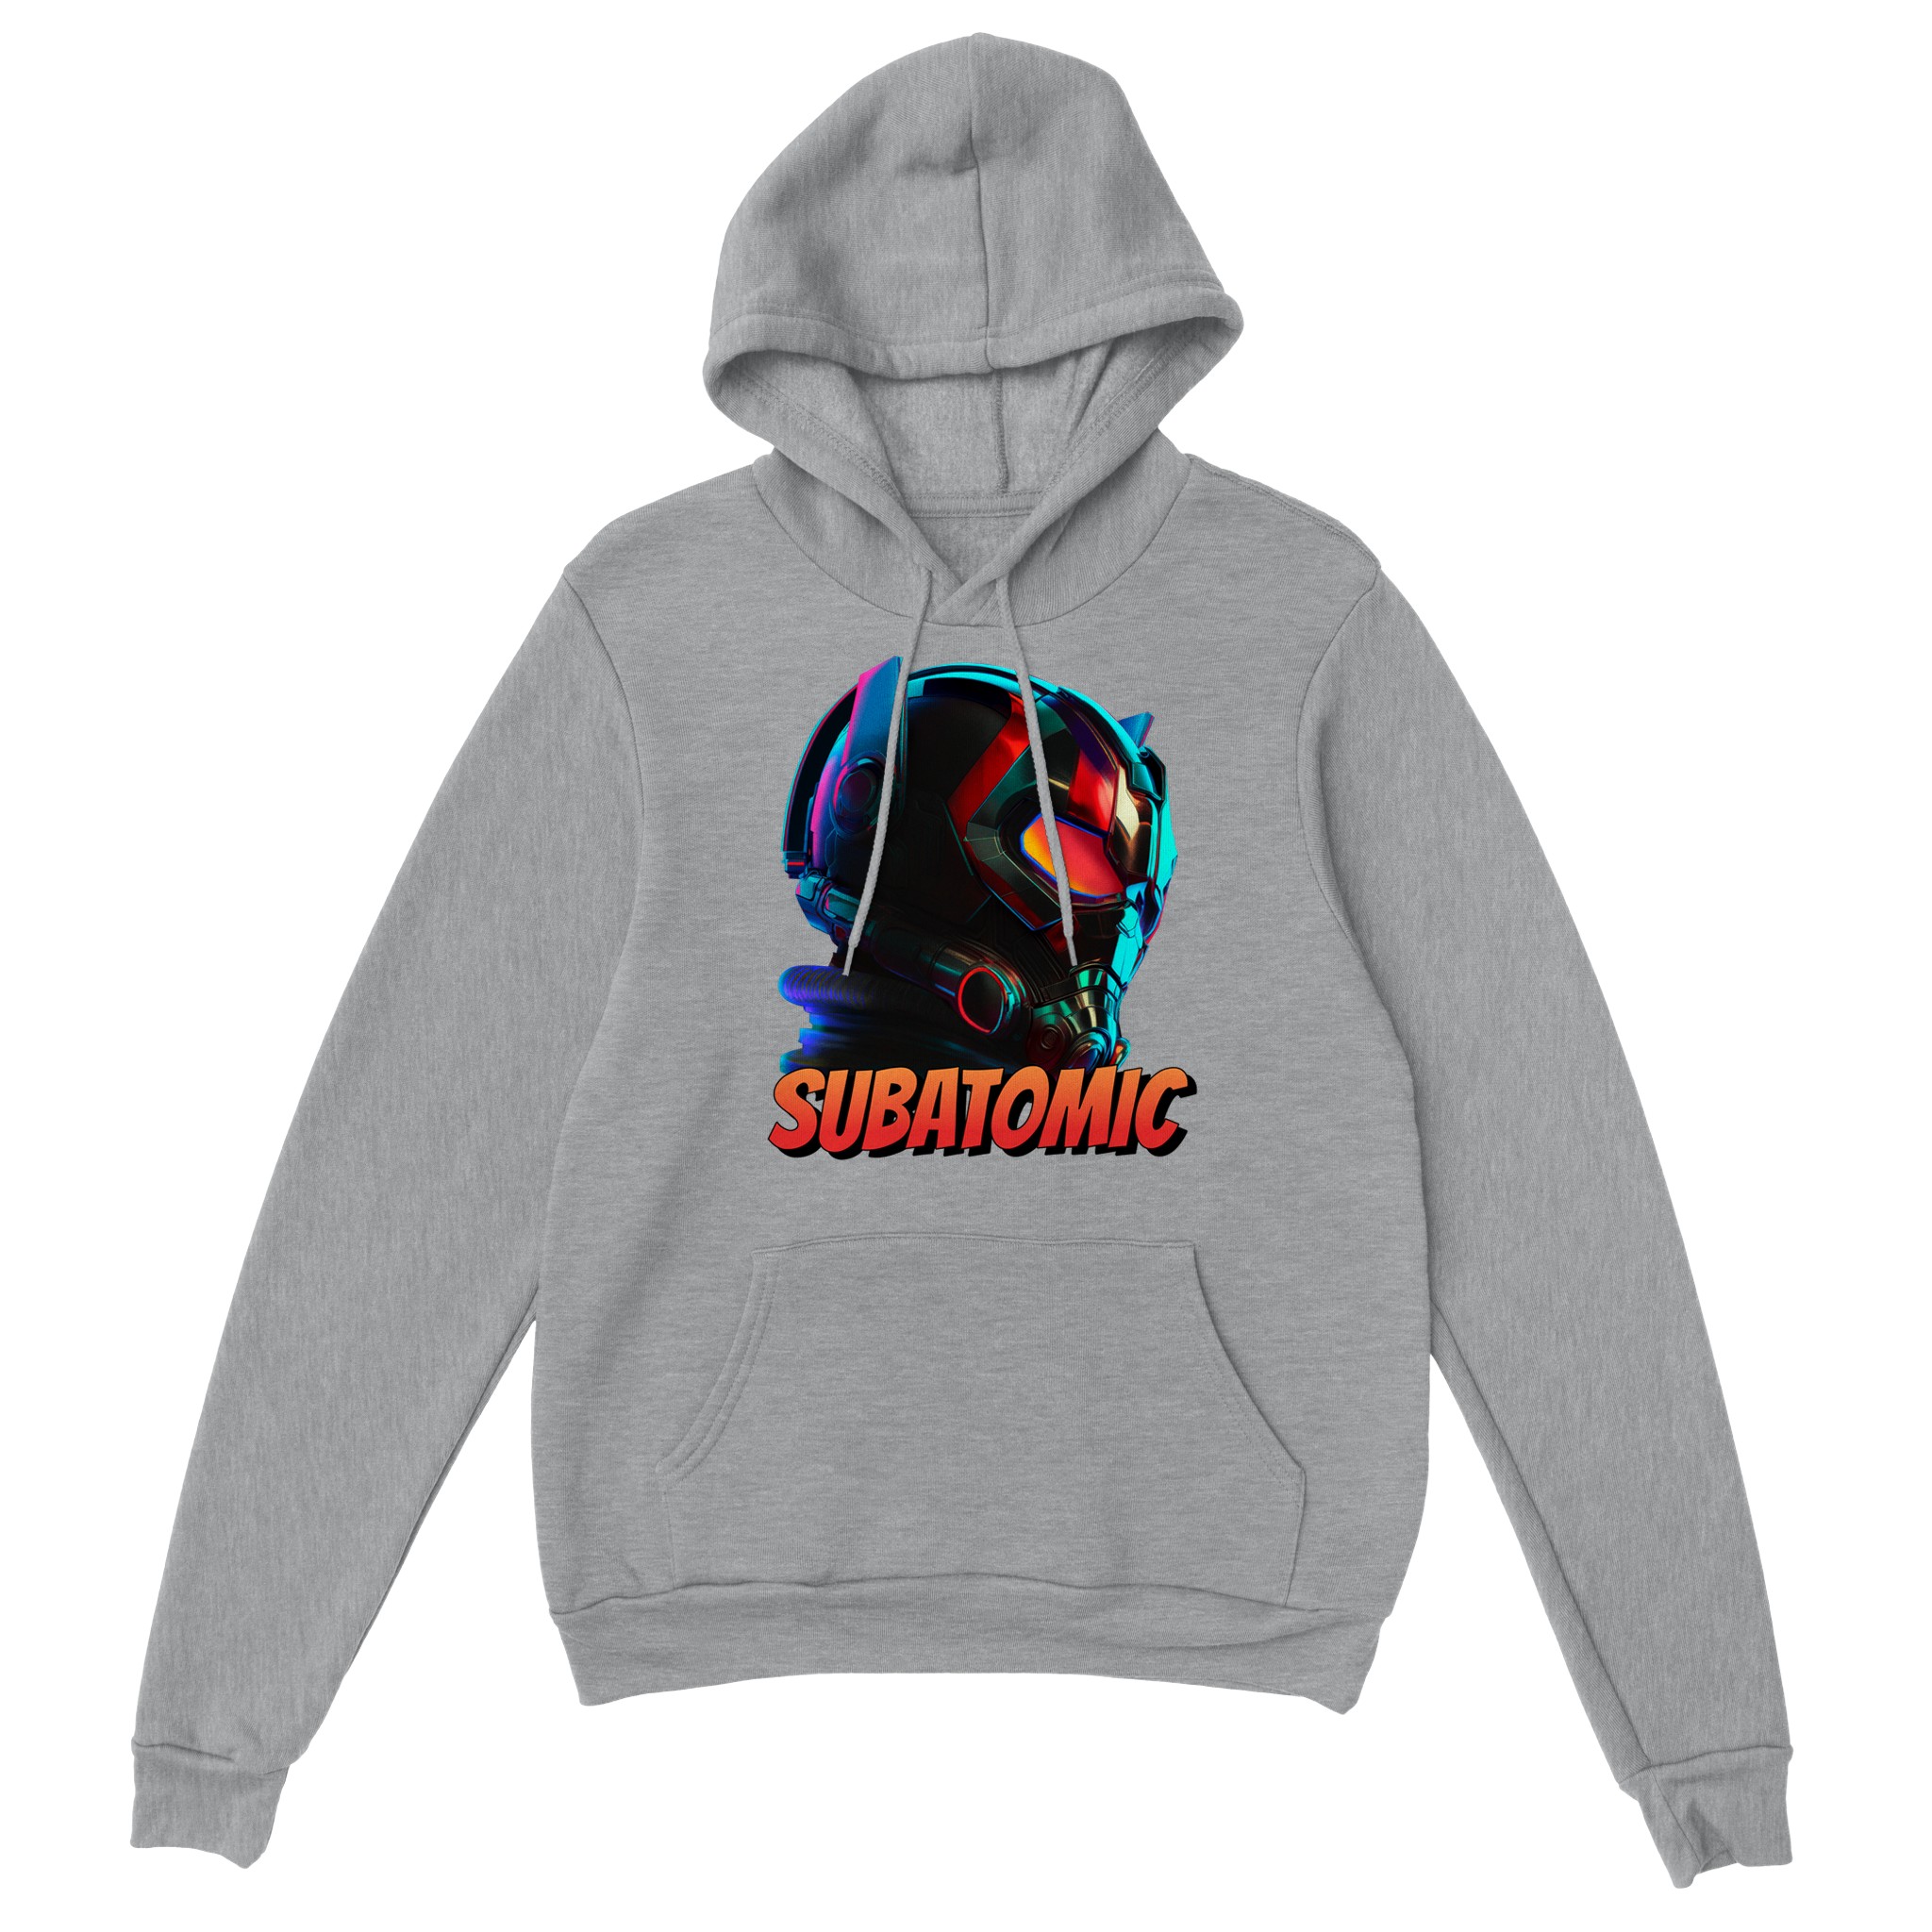 subatomic design on a hoodie